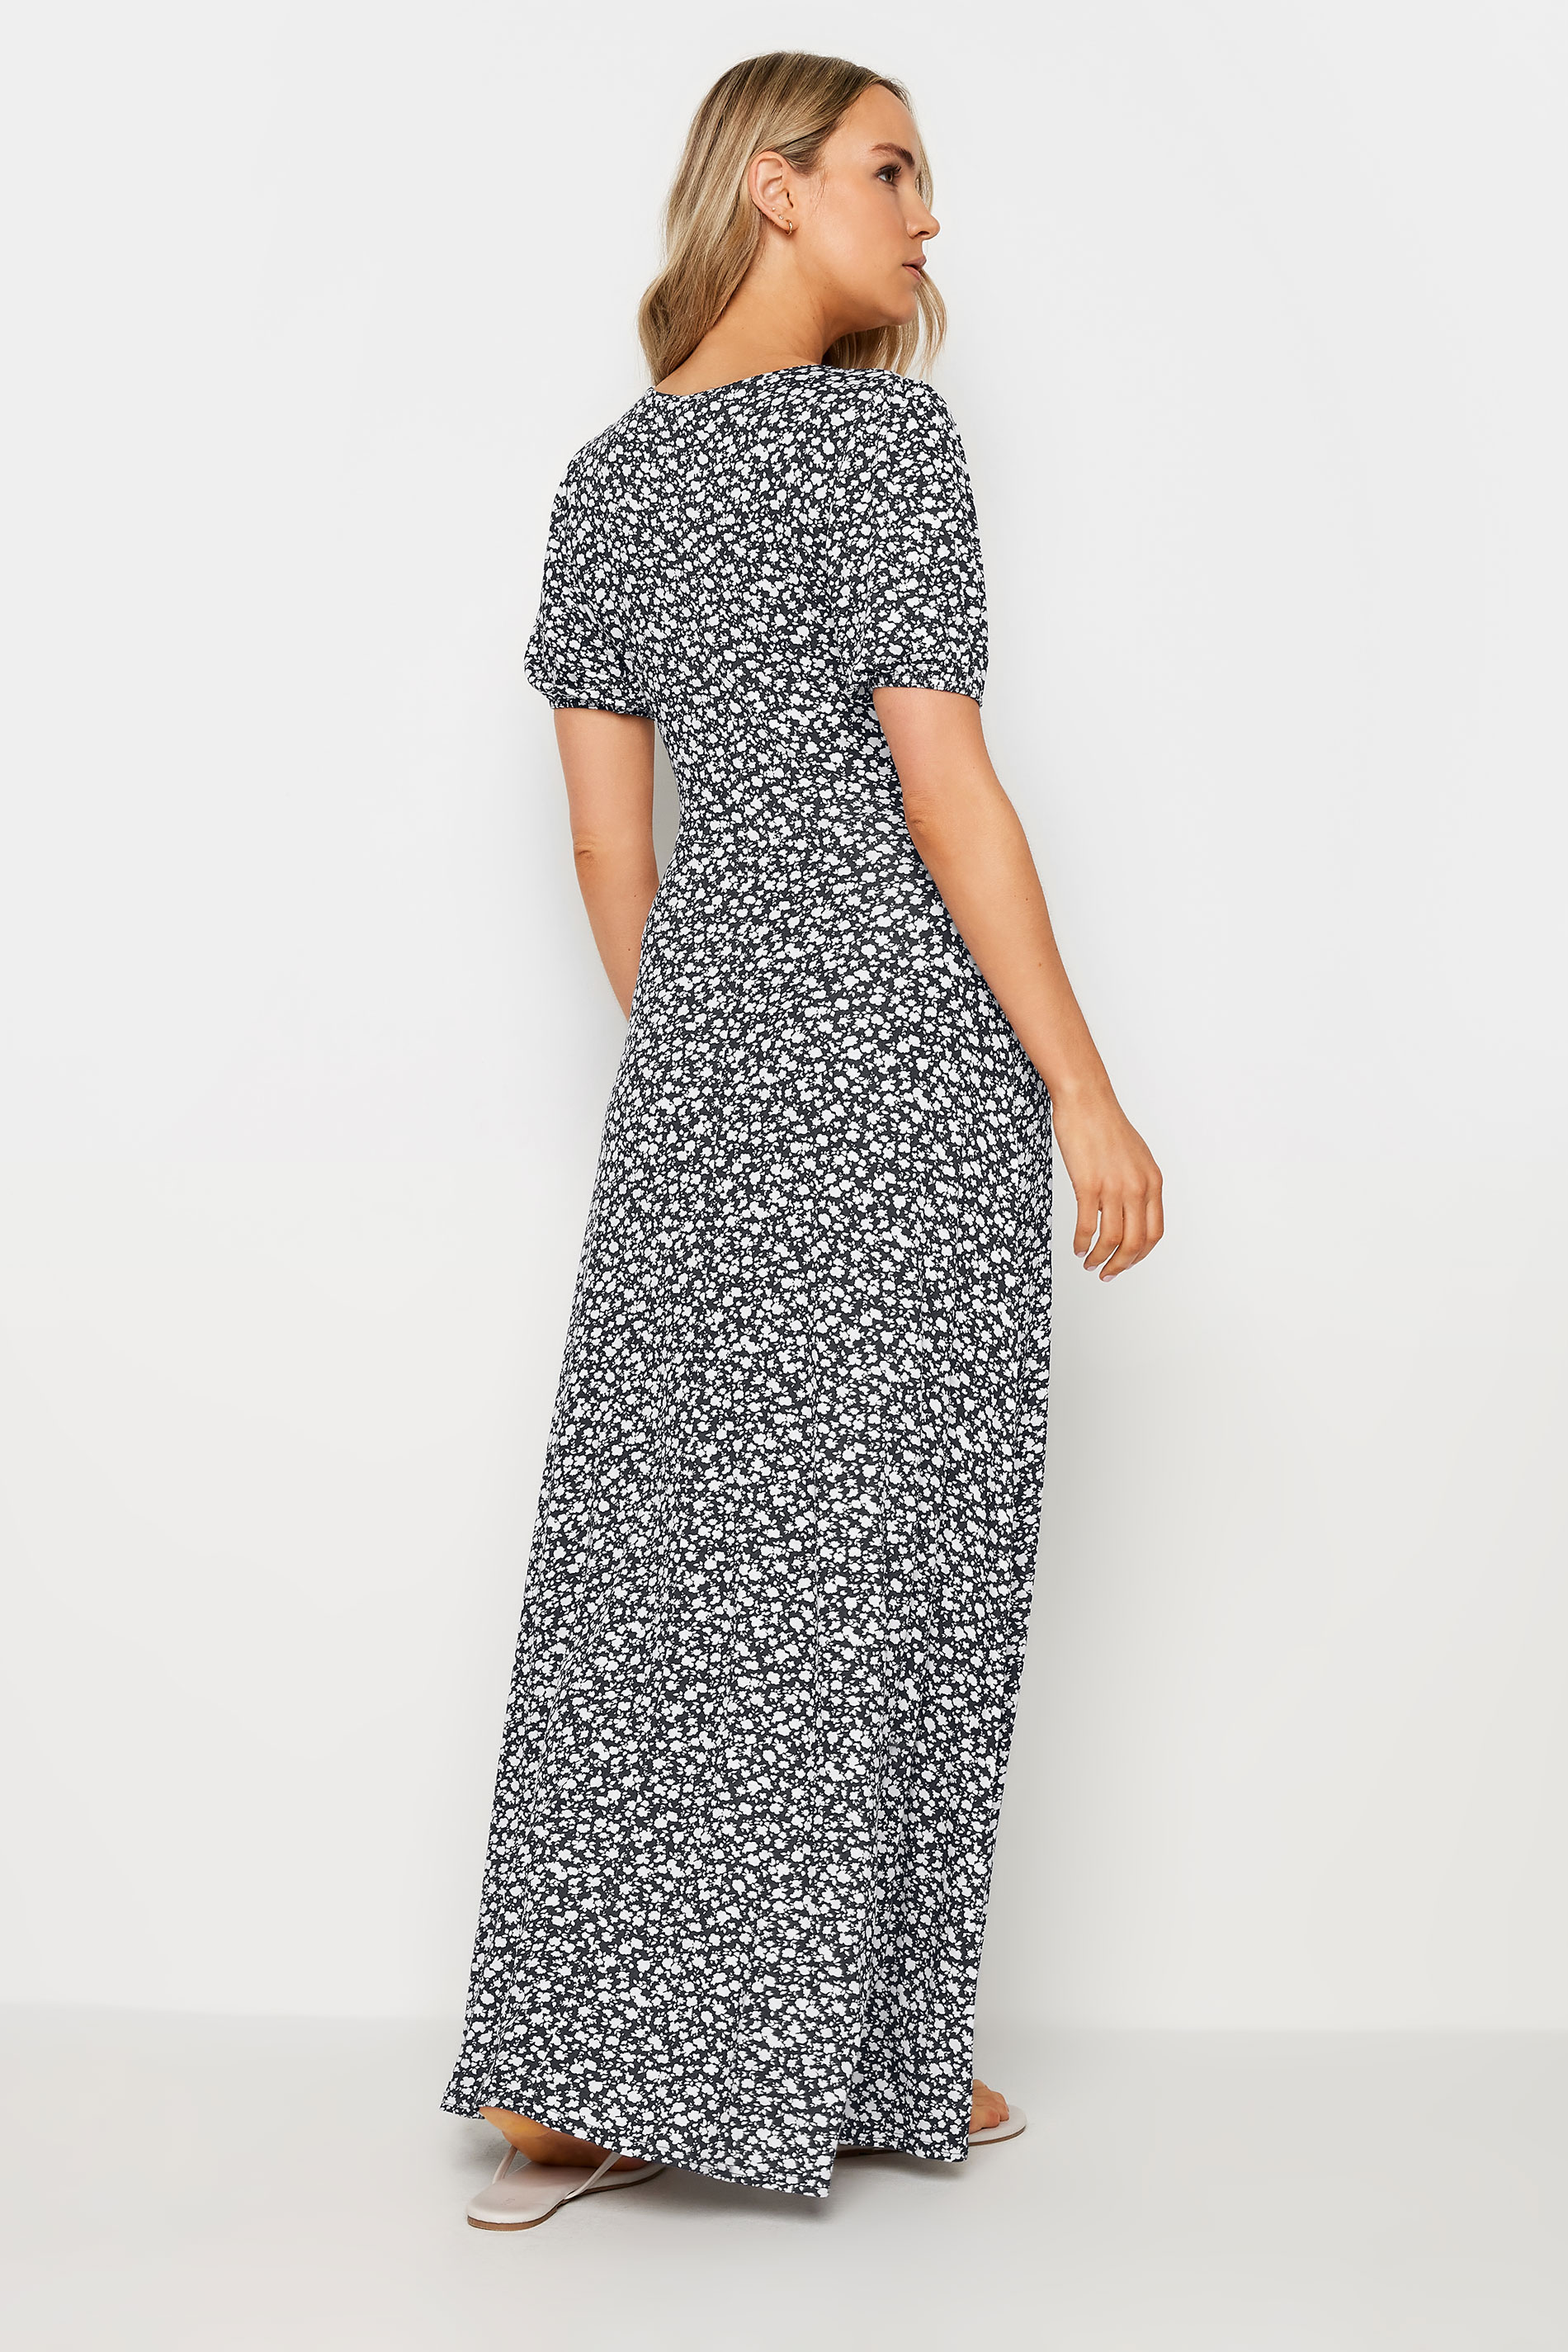 LTS Tall Women's Navy Blue Ditsy Floral Print Maxi Wrap Dress | Long Tall Sally 3